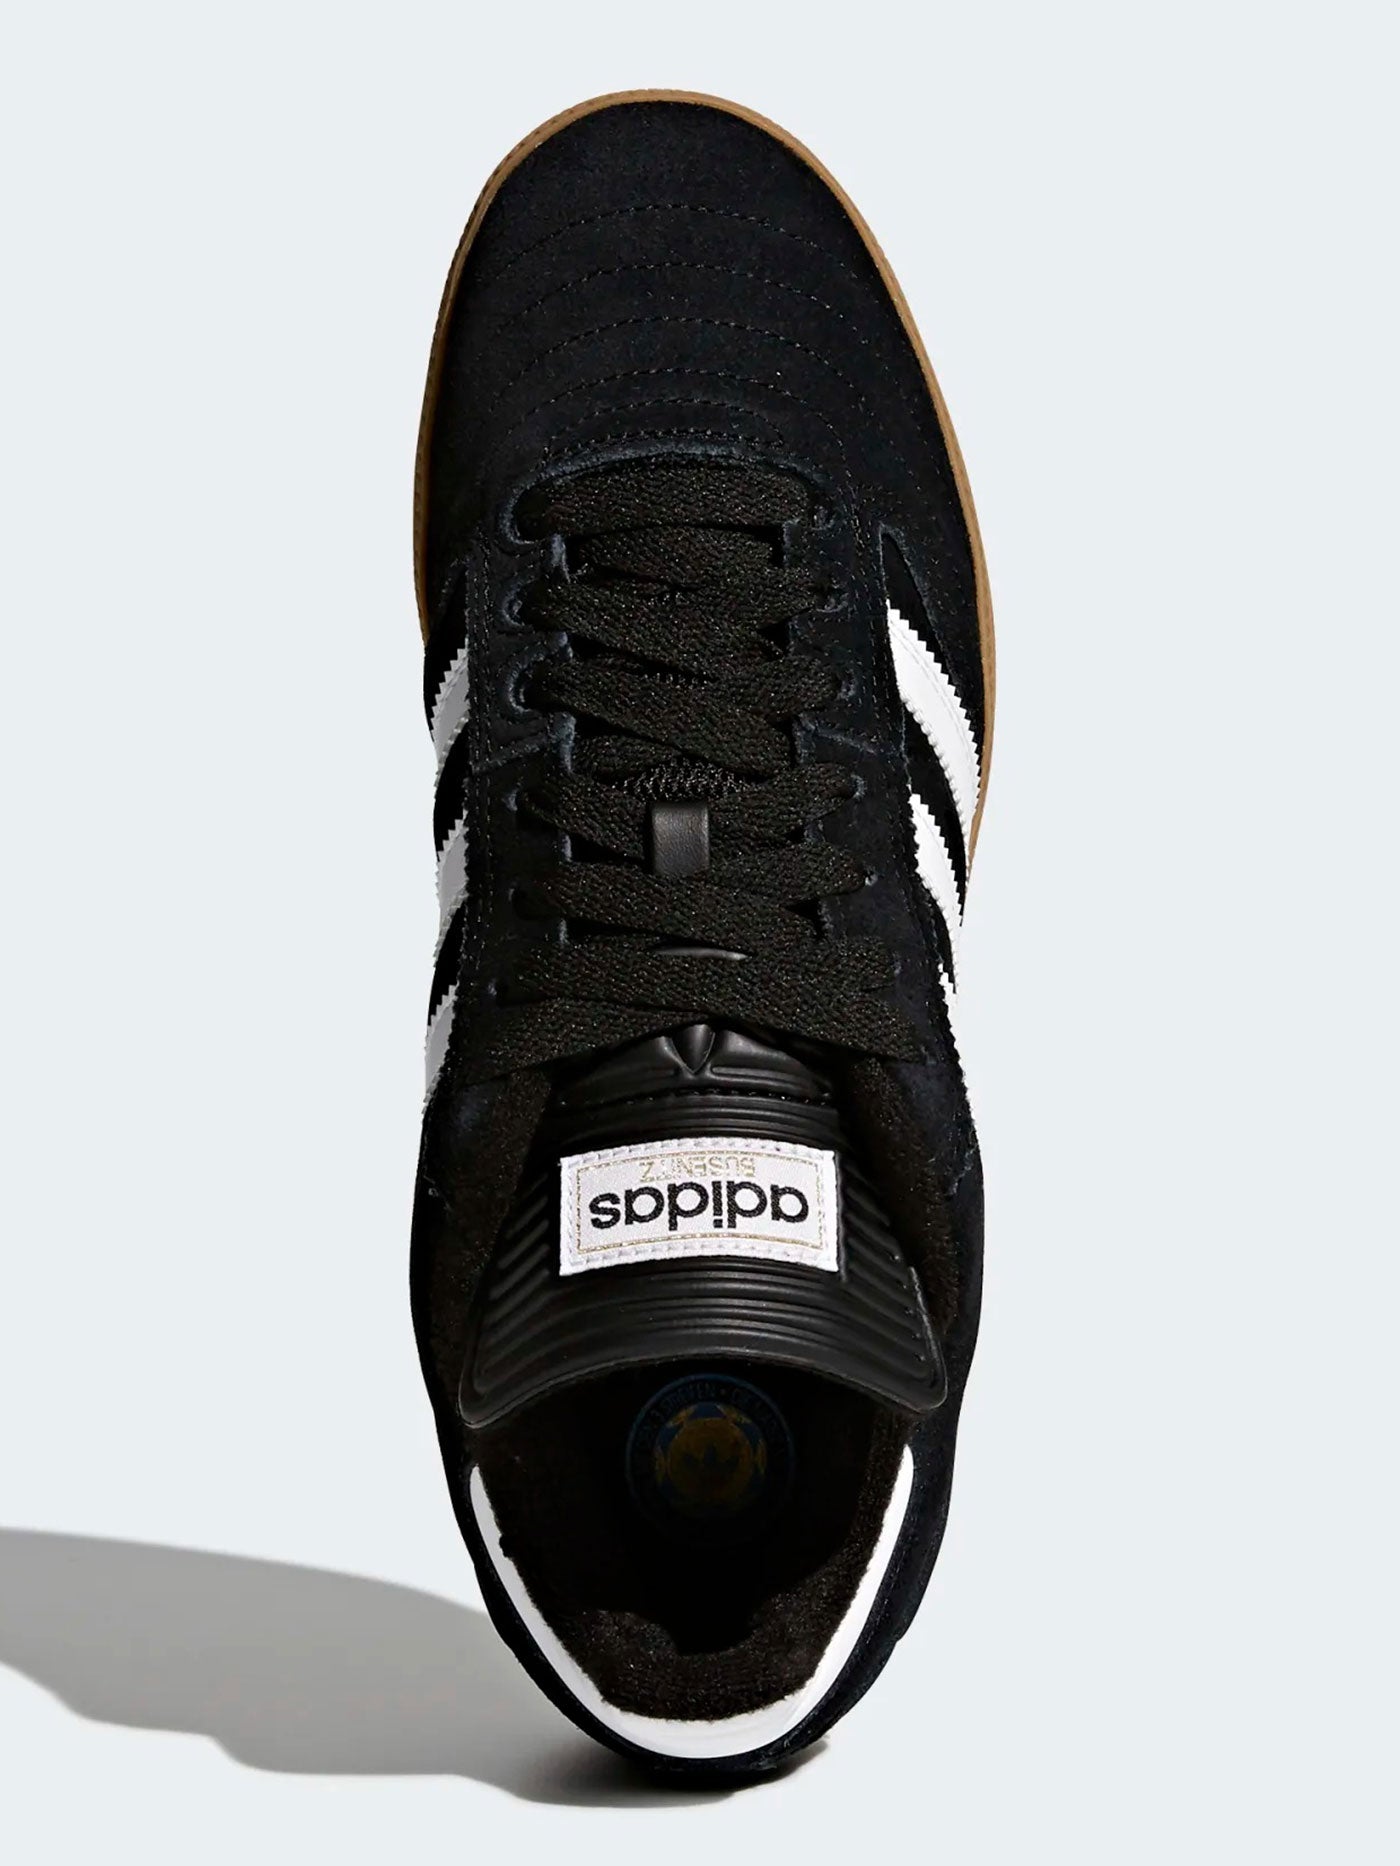 Adidas Busenitz Pro Black/White/Gold Shoes